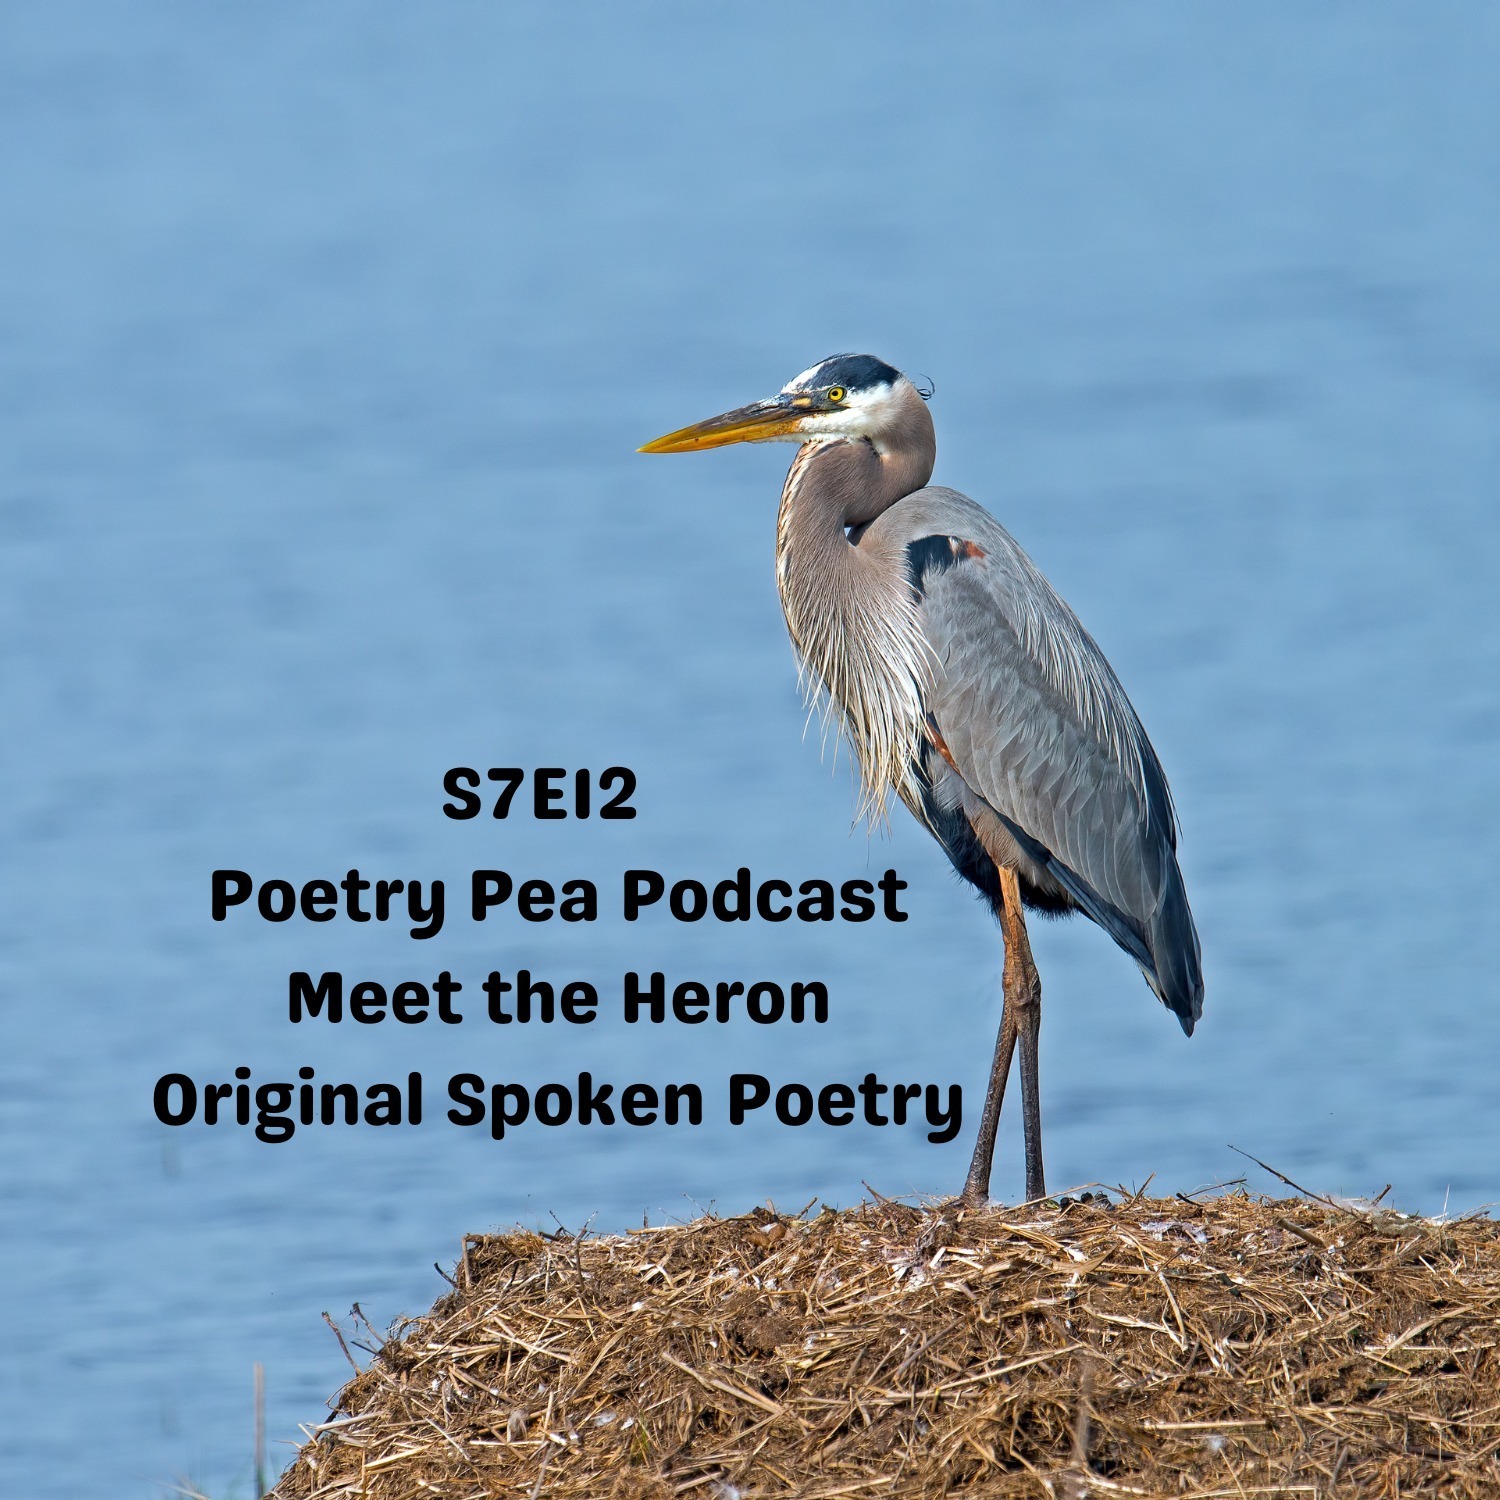 S7E12 Meet the Heron: Original spoken Poetry